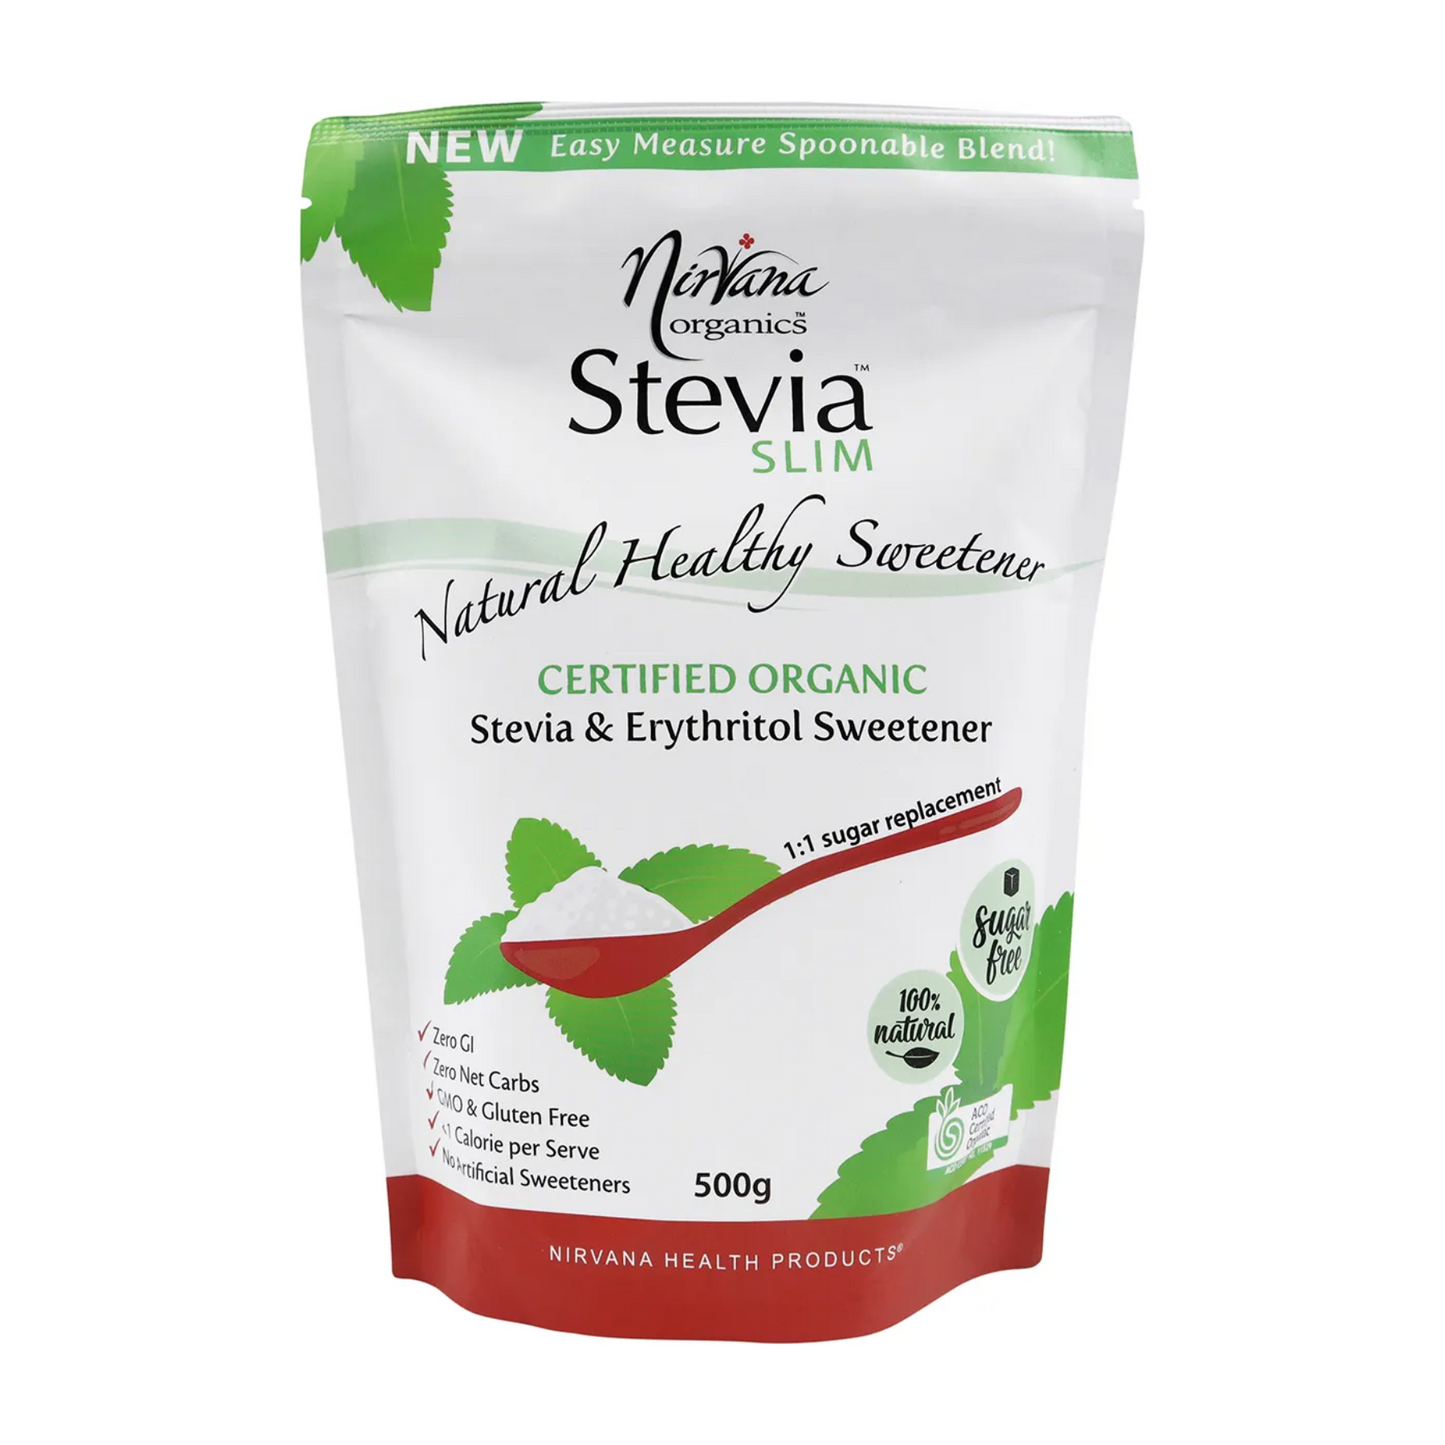 Nirvana Organics Stevia Slim 225g Or 500g, Certified Organic Stevia & Erythritol Sweetener